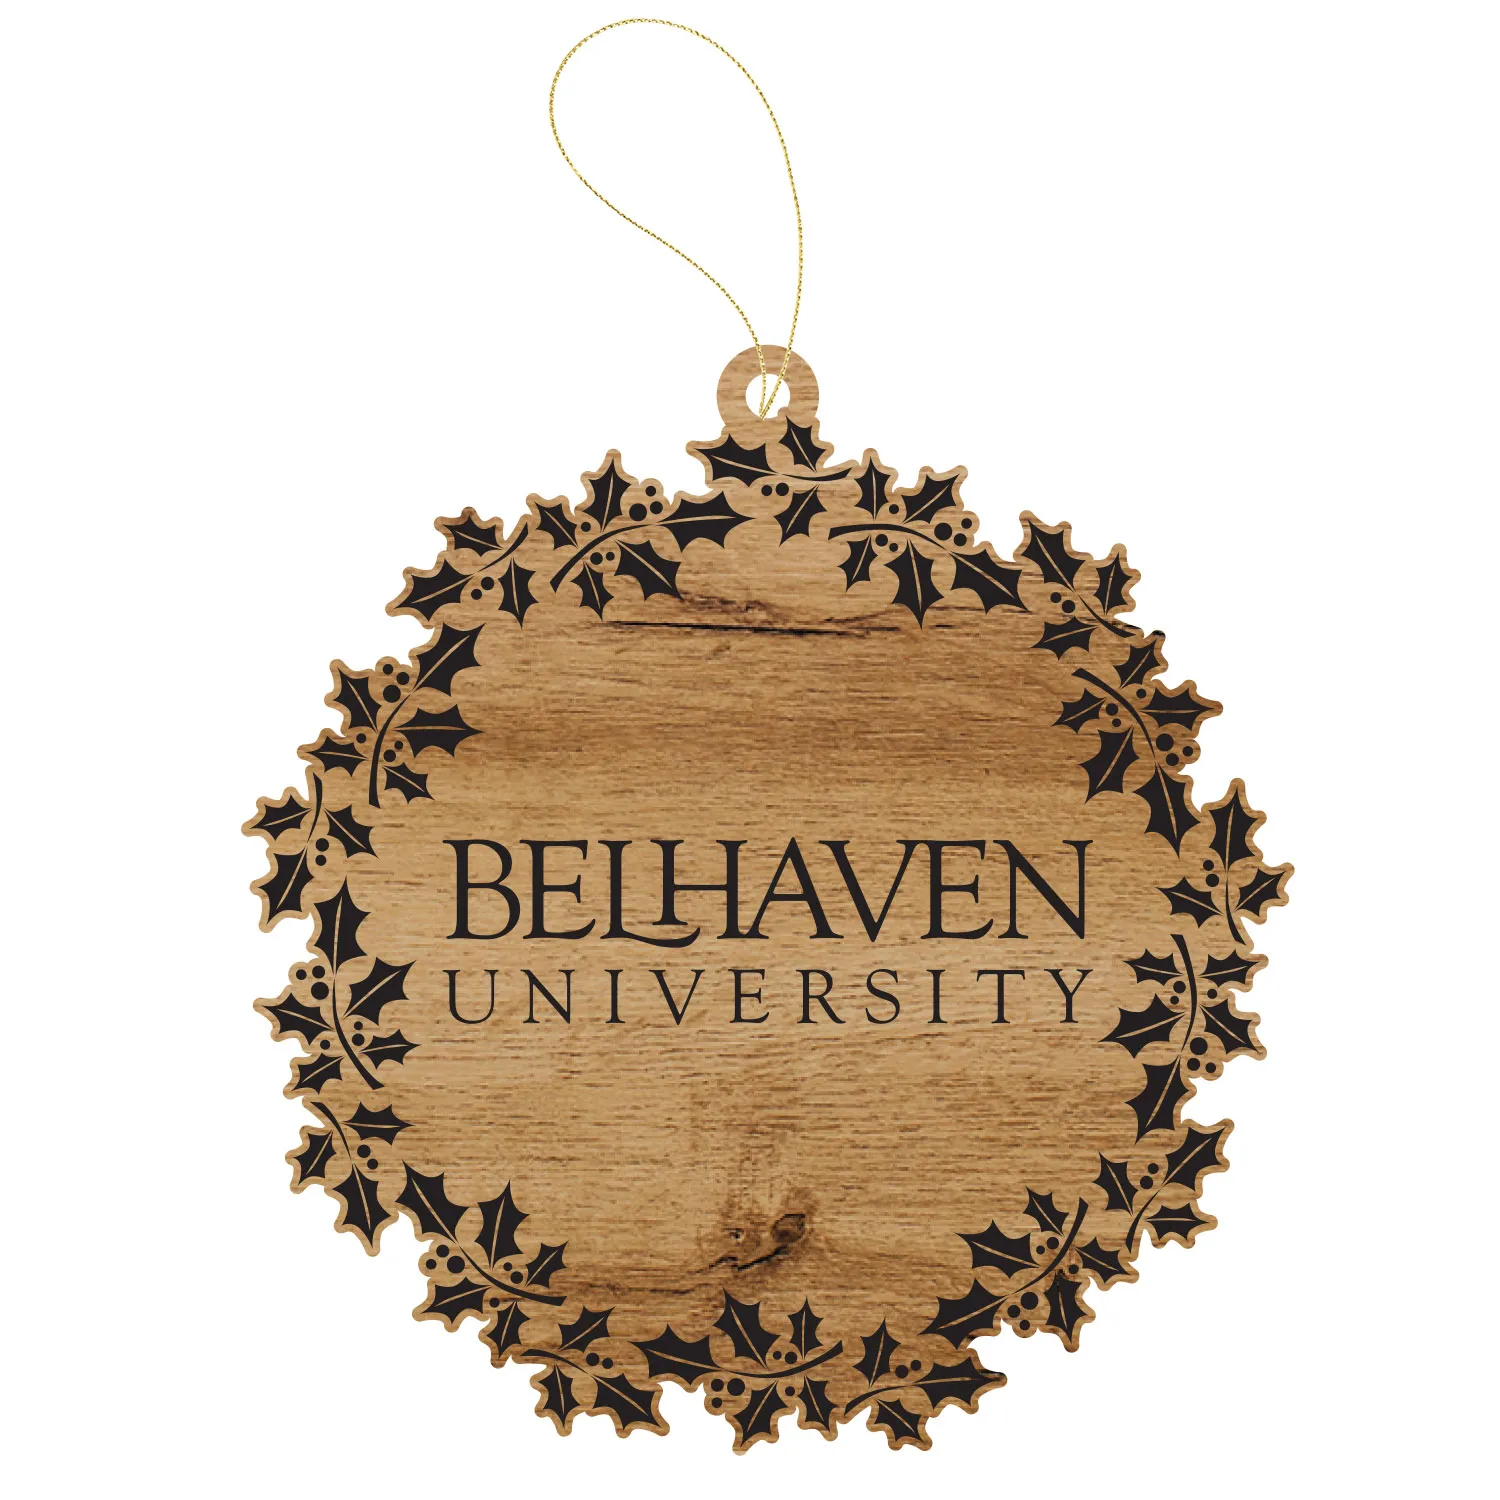 Belhaven university branded wooden ornament